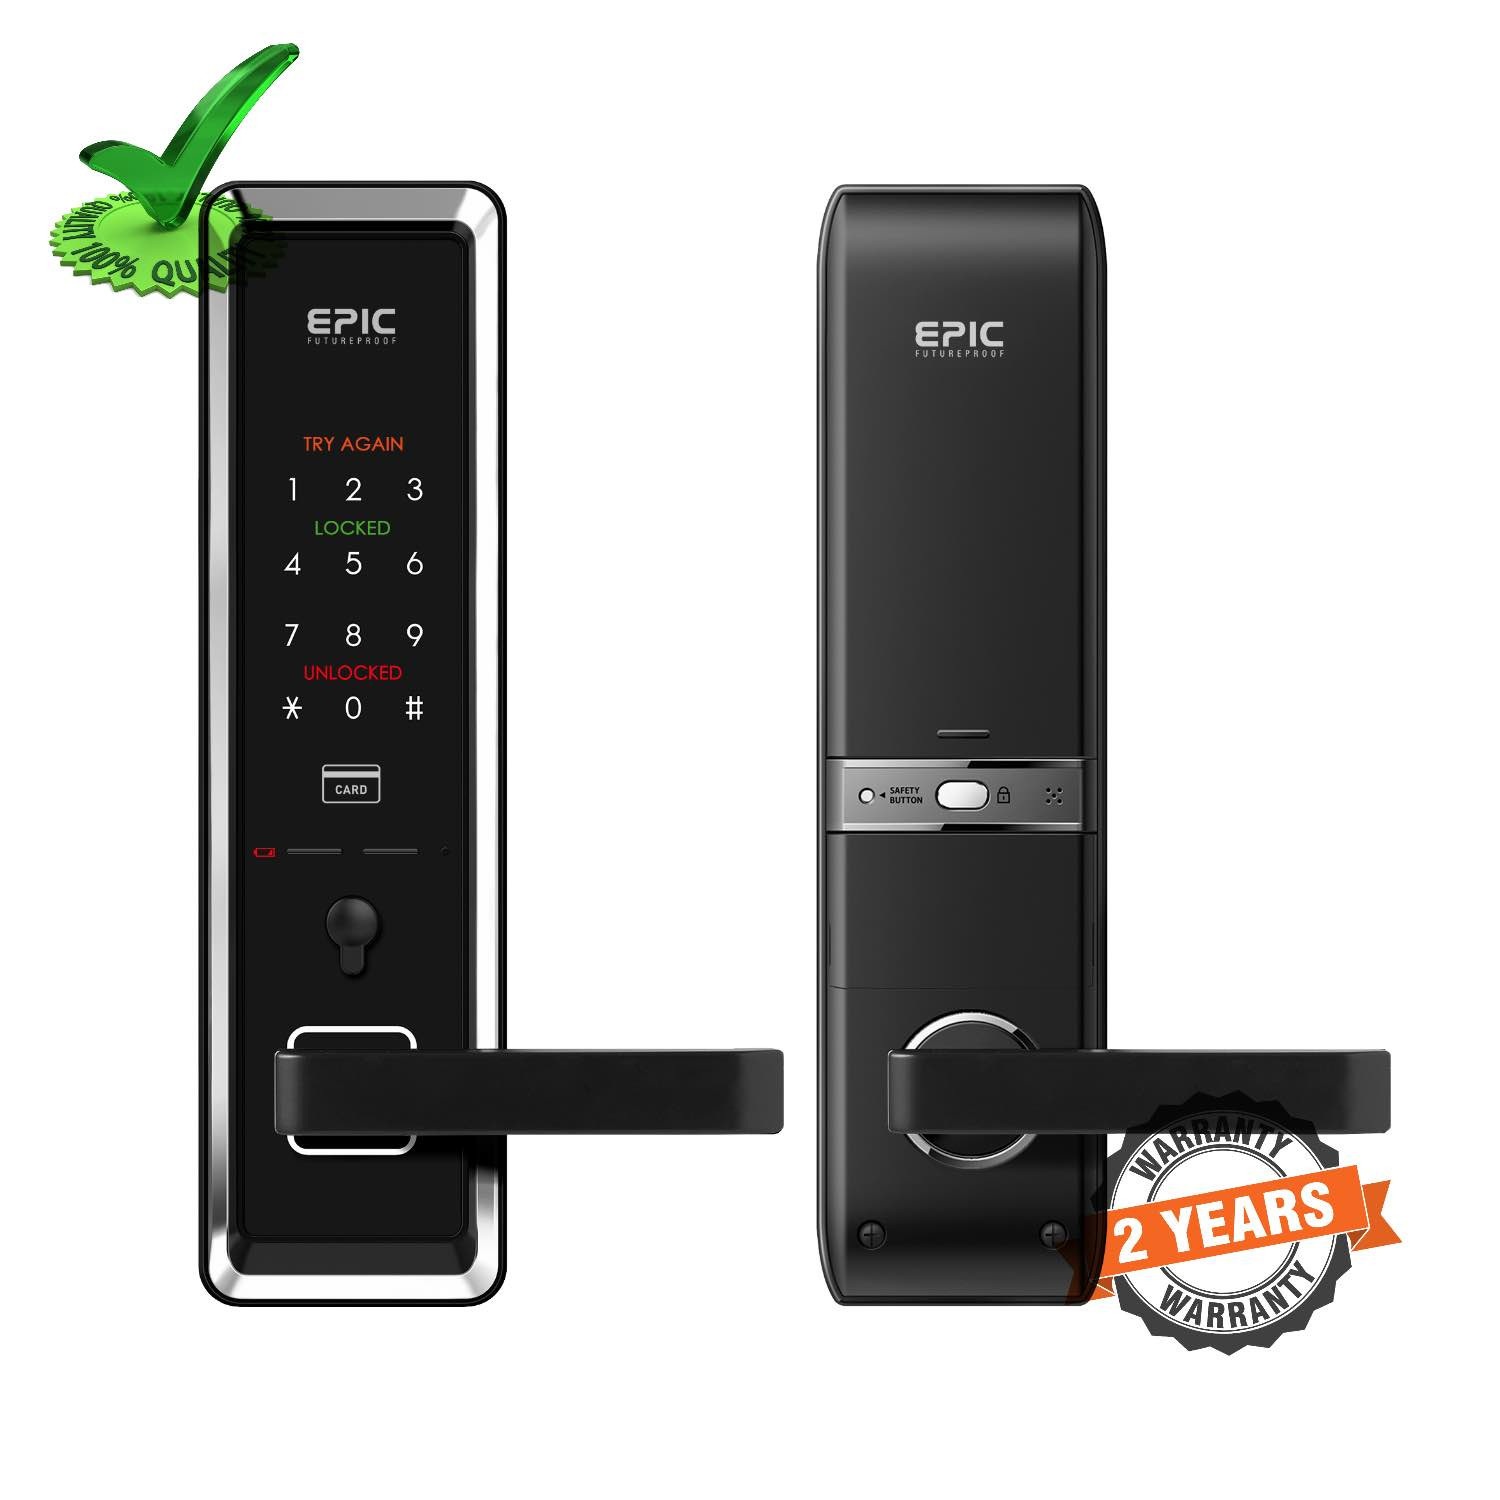 Epic ES-K70 RFID Card Pin Password Operated Digital Door Lock